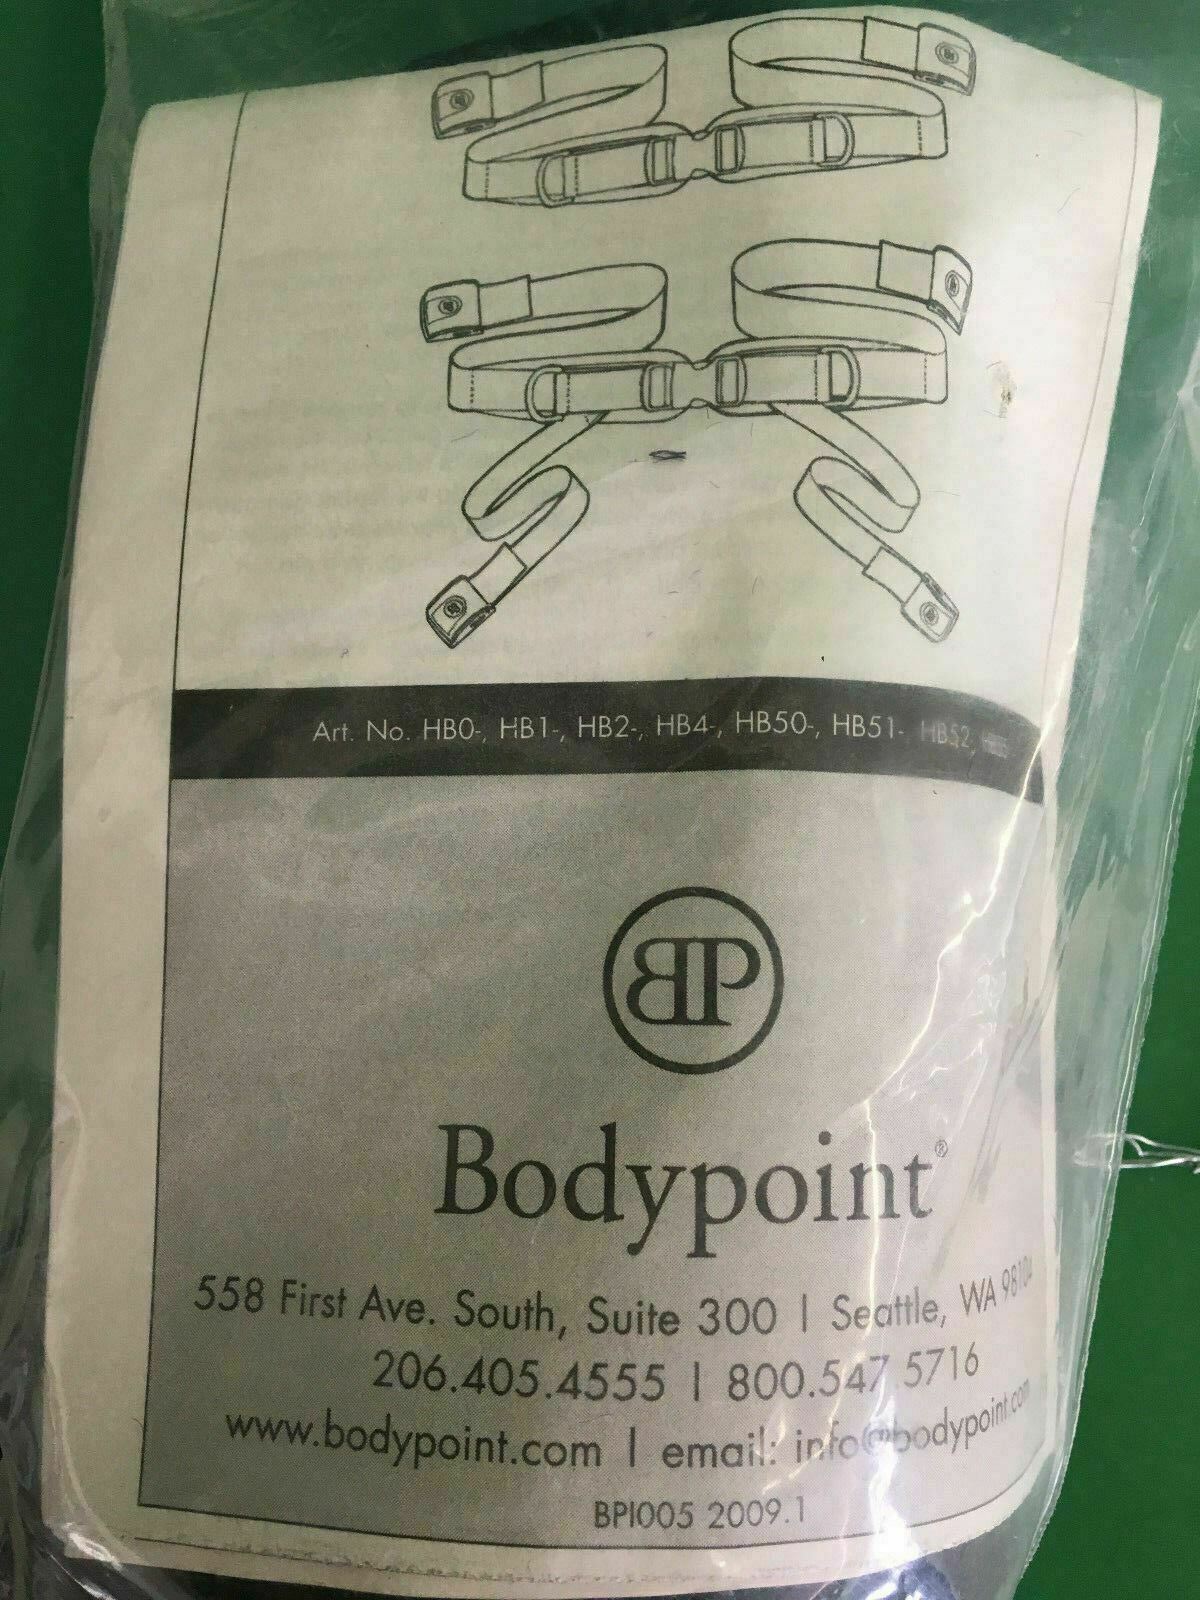 Bodypoint Hip Belt, Rear - Pull, PB (Small) Flat - MT, F8 Wheelchair #B615